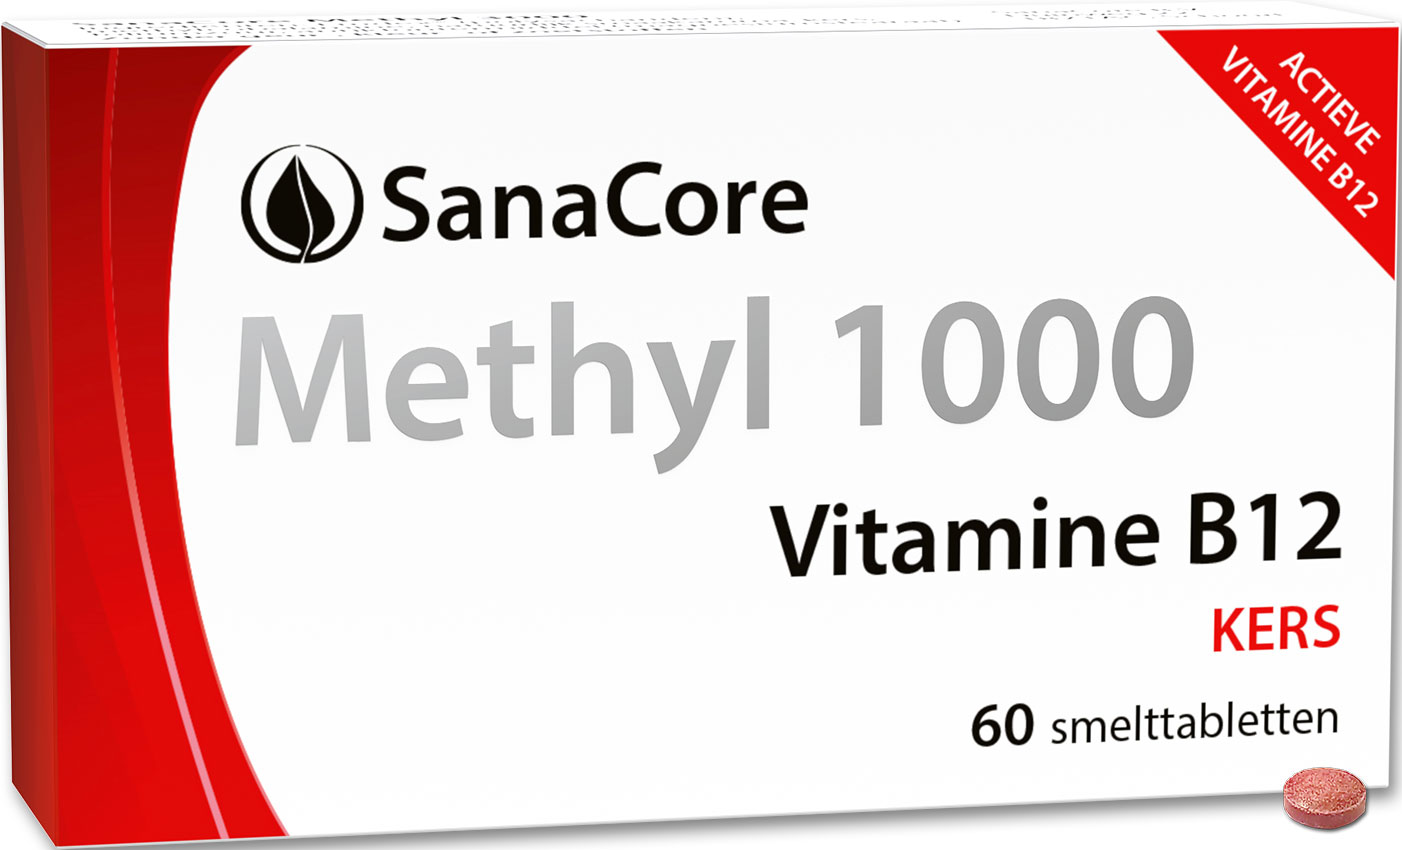 Methyl 1000 ZONDER FOLIUMZUUR